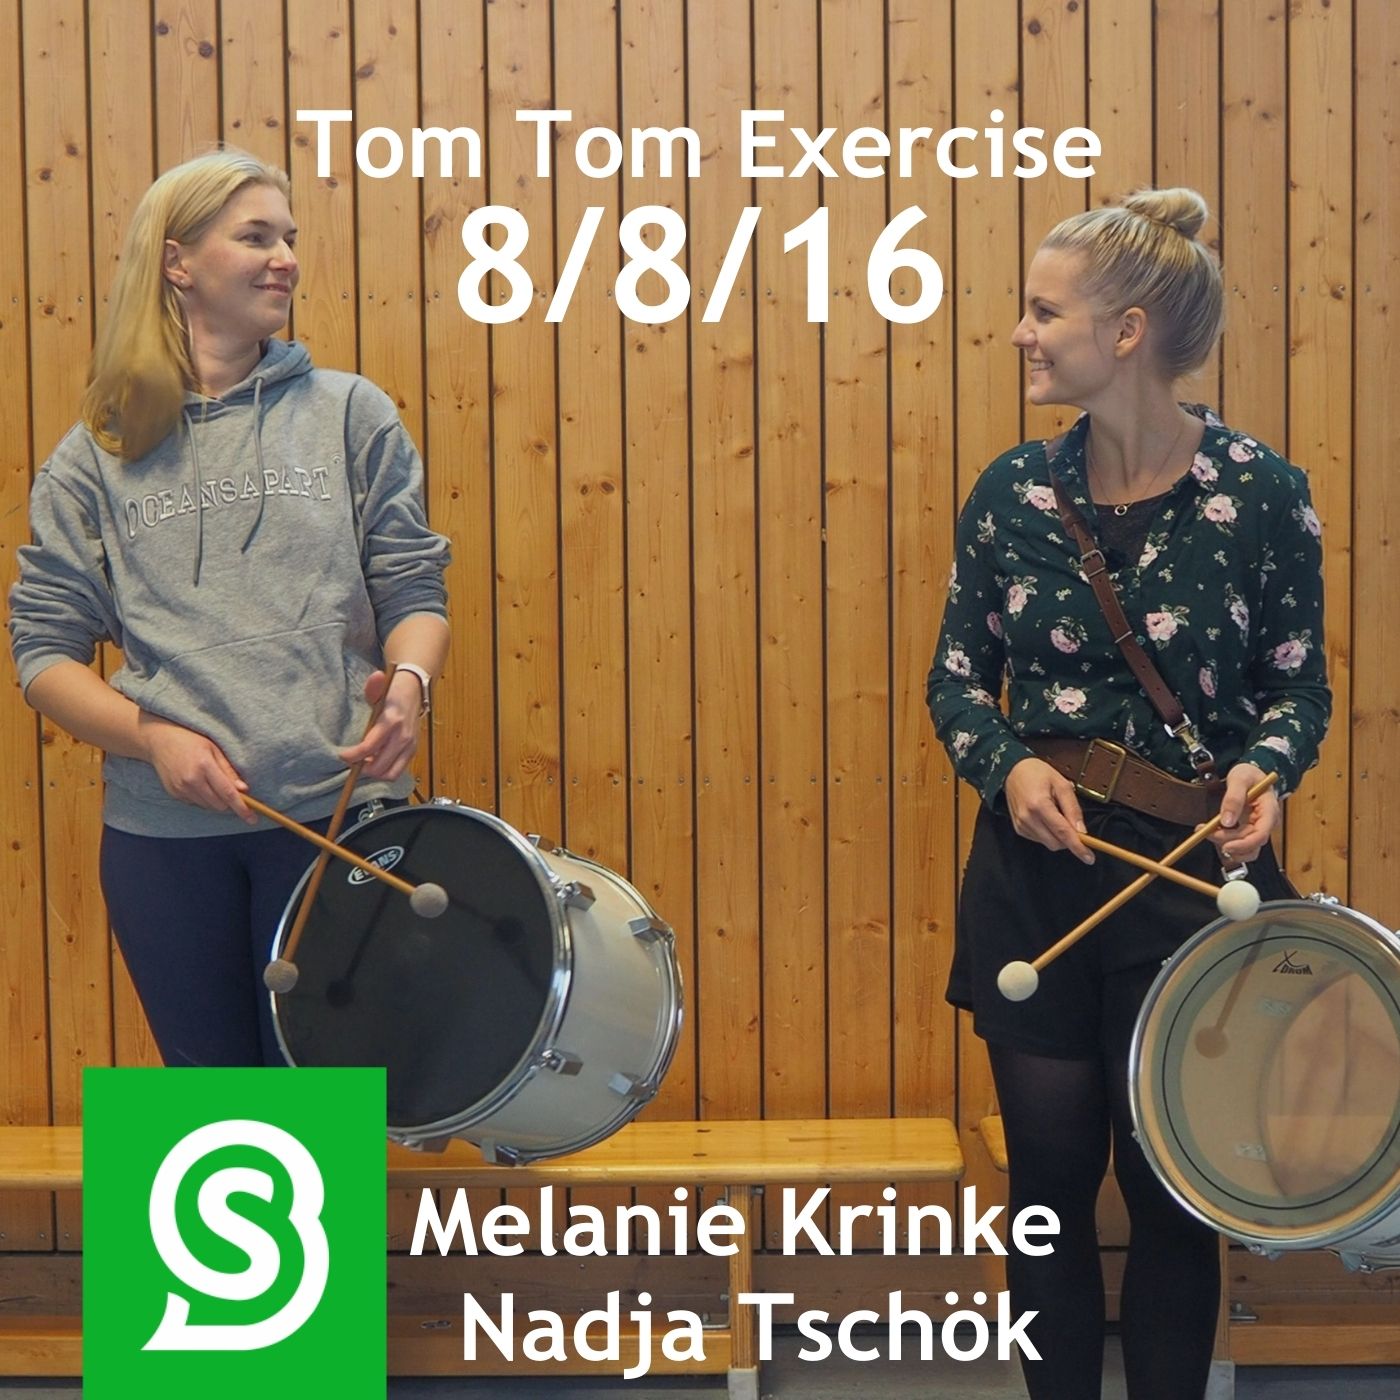 Tom Tom Exercise - 8/8/16 Übung mit Melli und Nadja